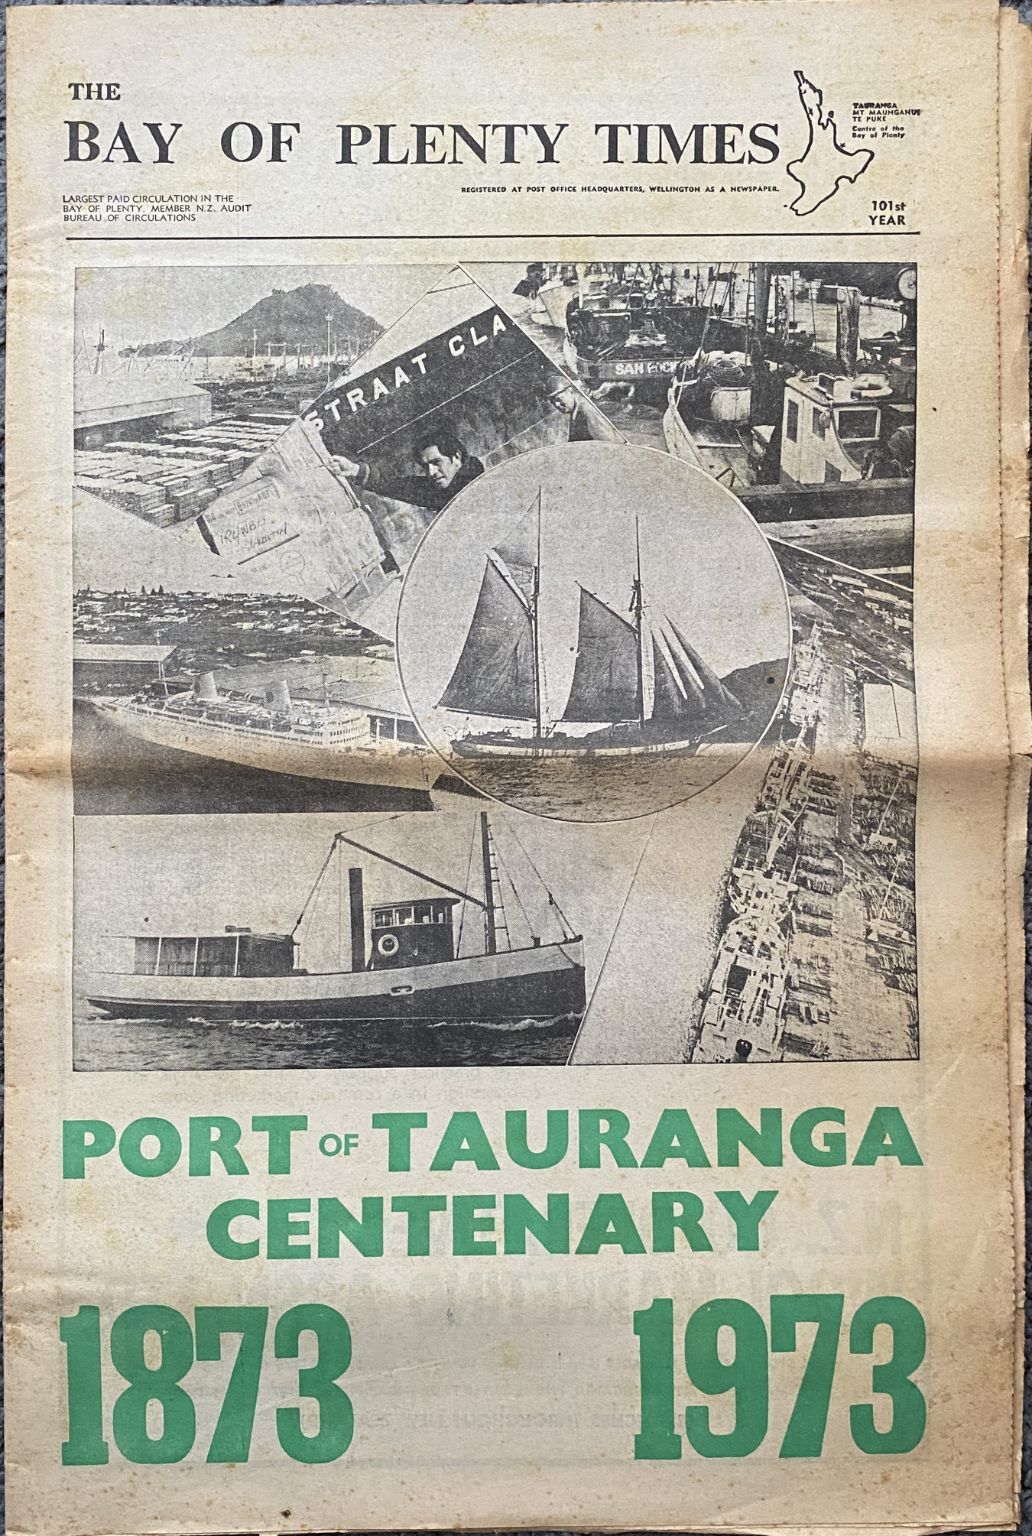 OLD NEWSPAPER: Bay of Plenty Times - Port of Tauranga Centenary 1873-1973